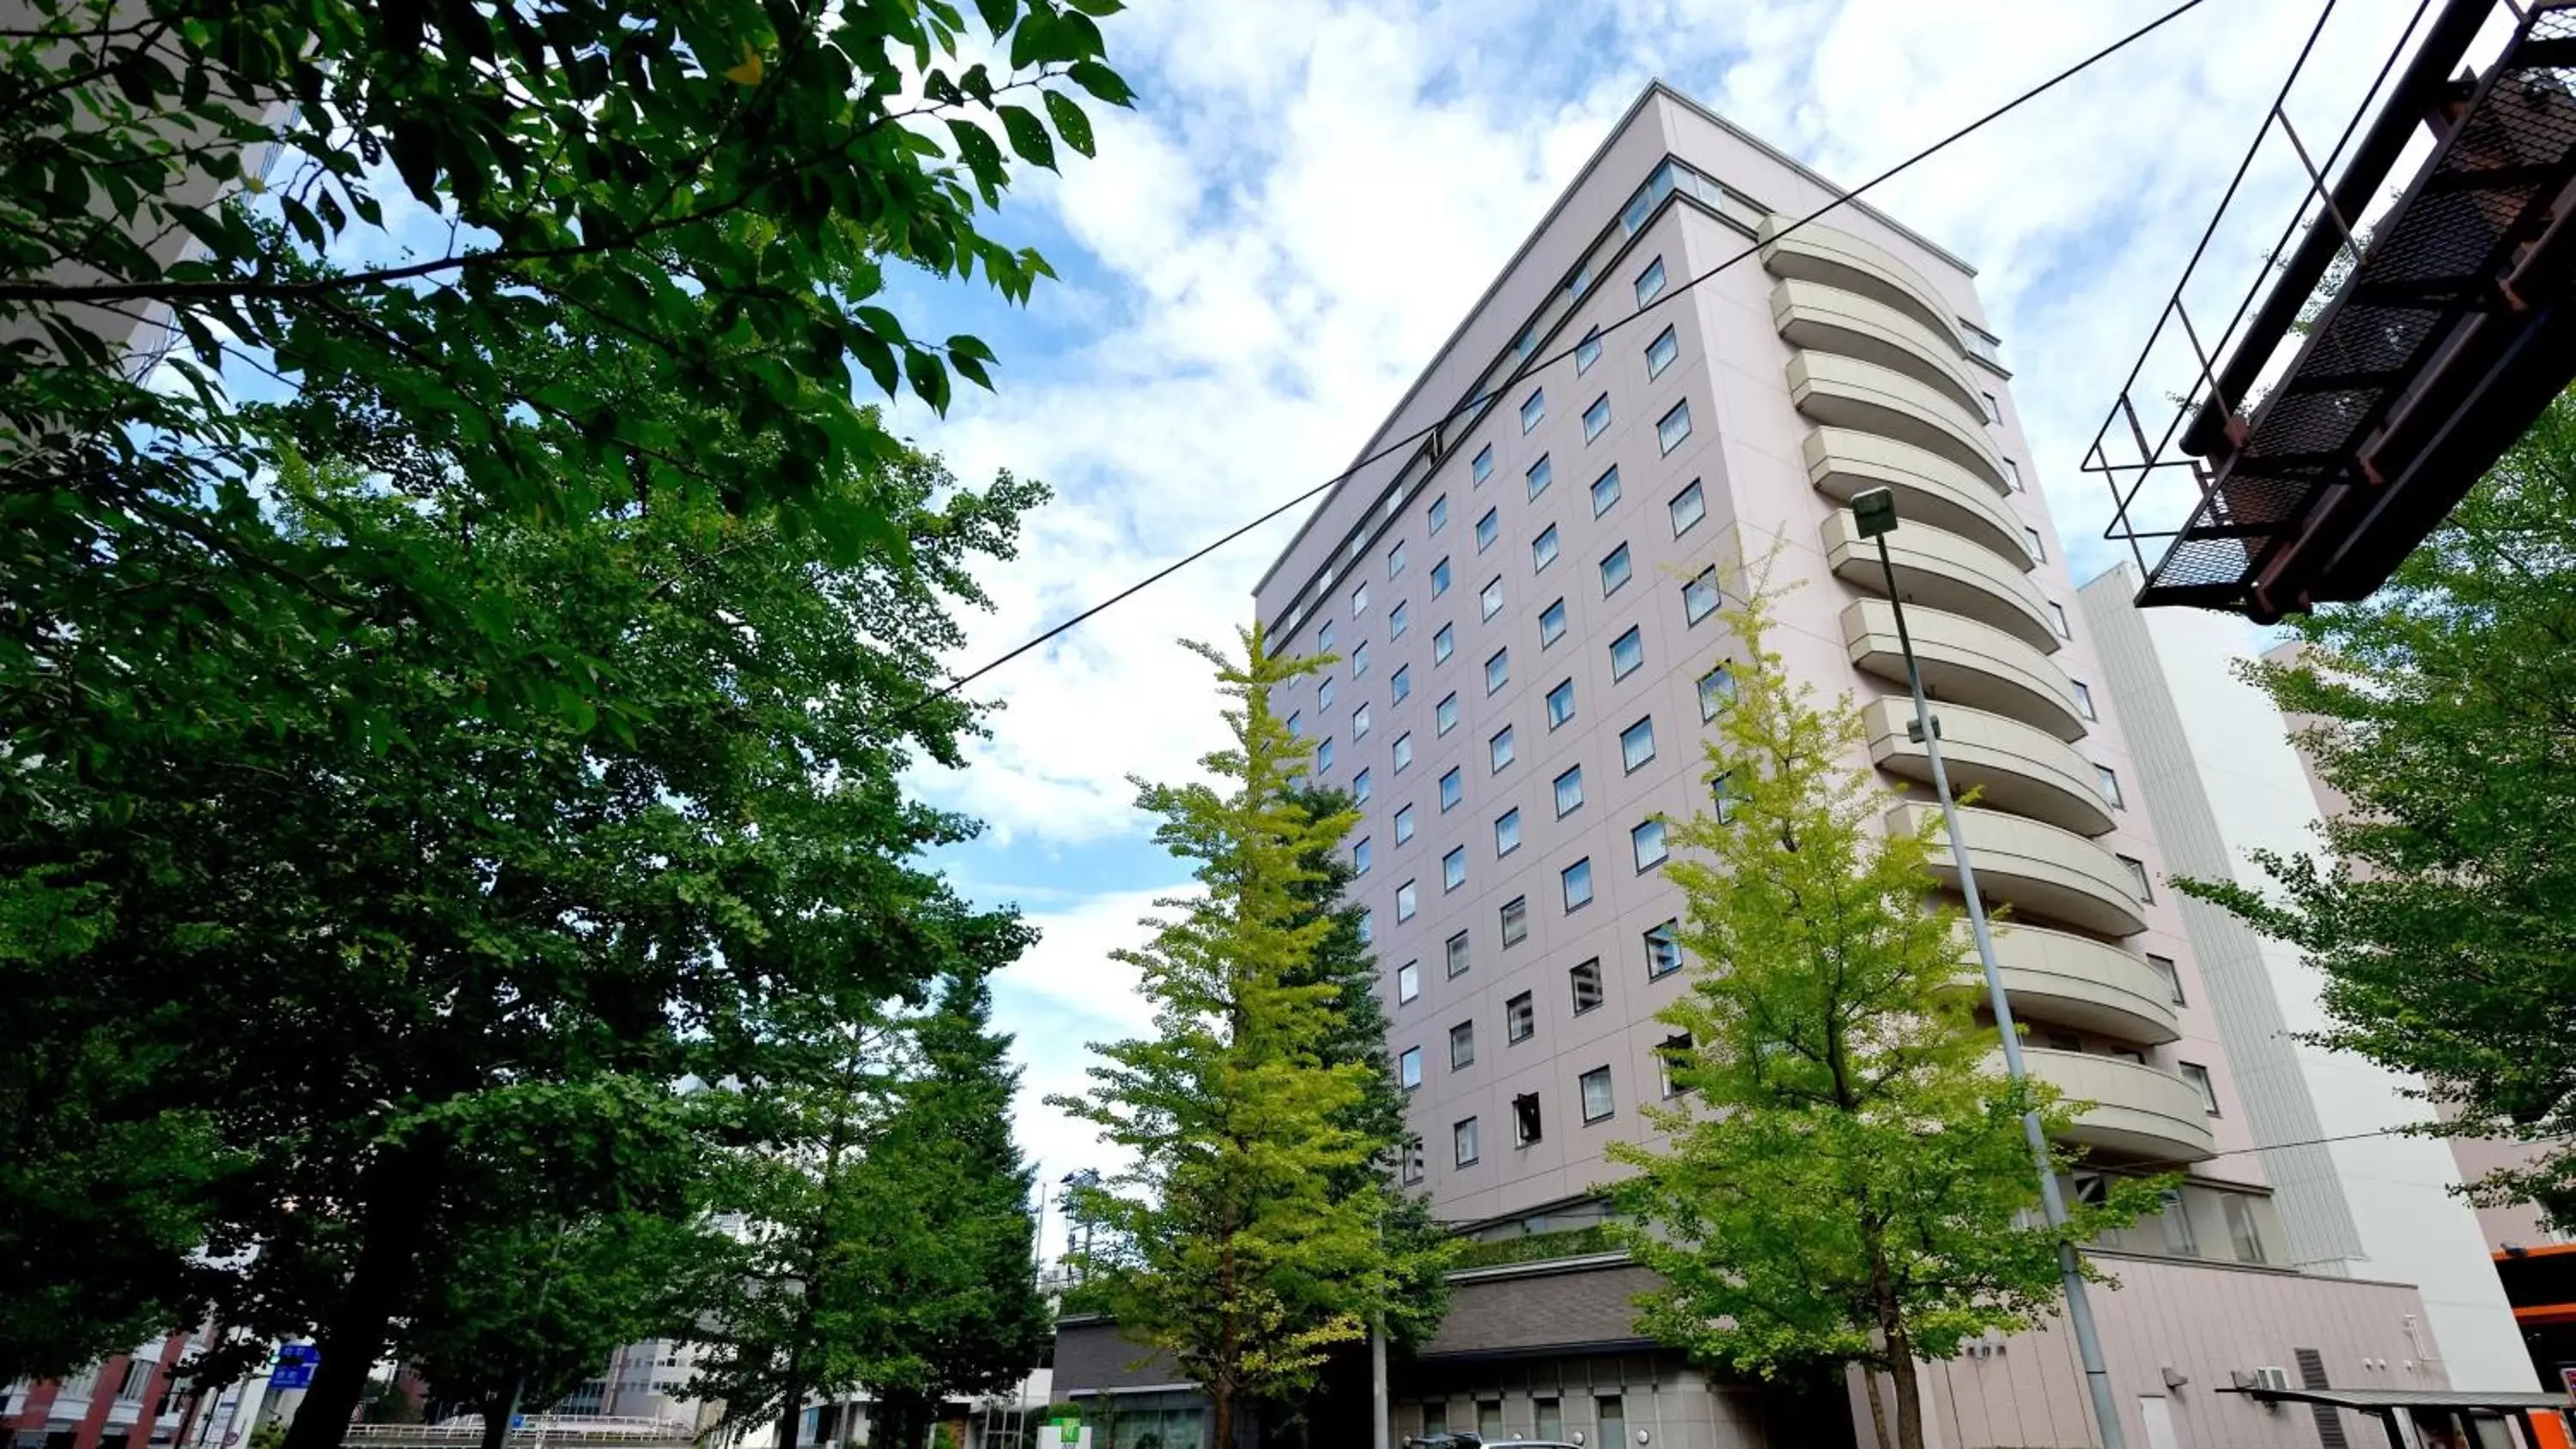 Property Building in ANA Holiday Inn Sendai, an IHG Hotel